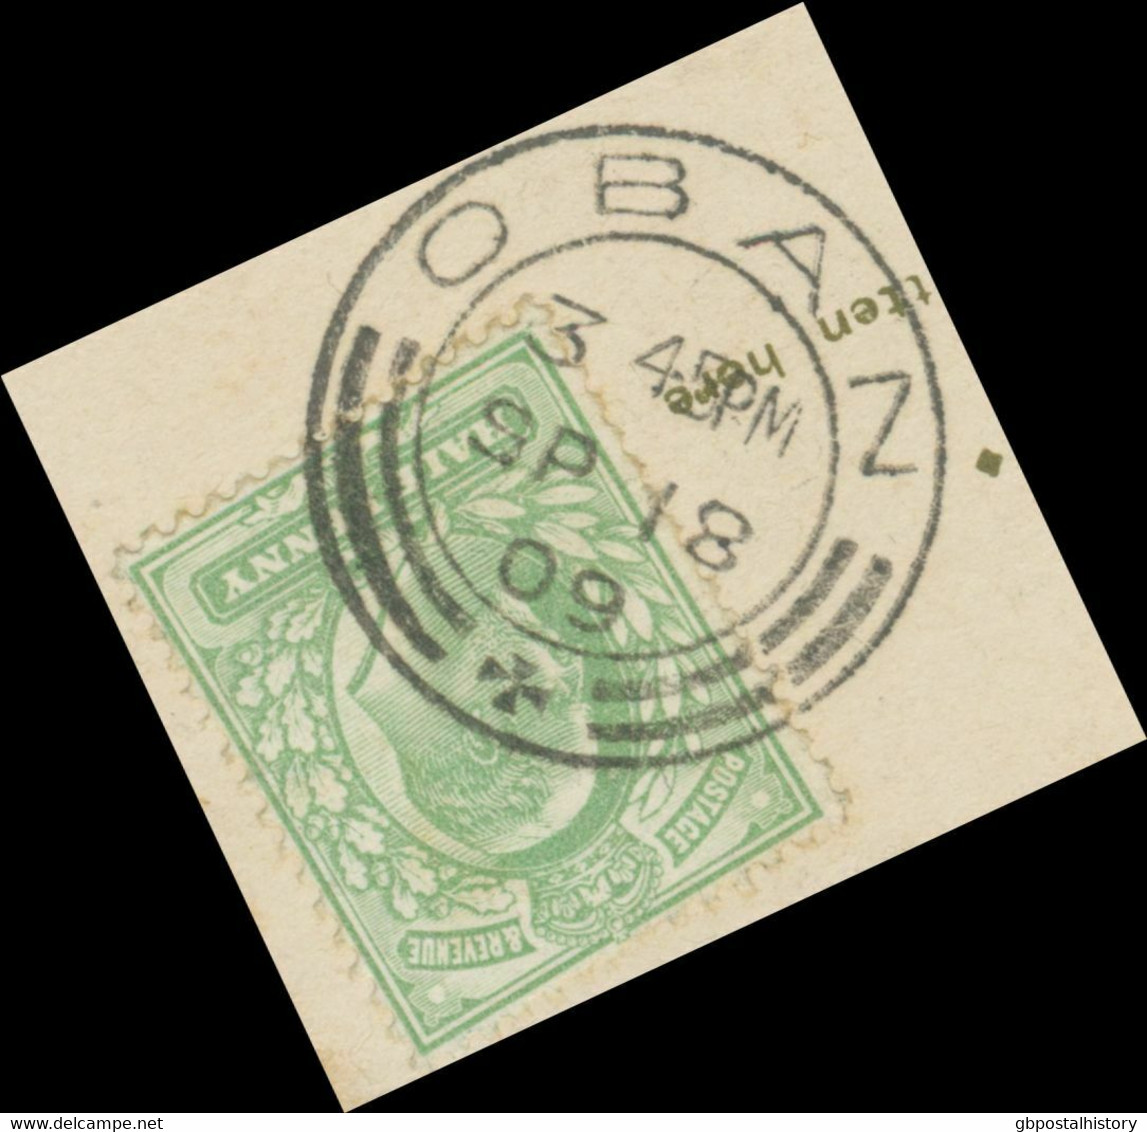 GB SCOTTIS VILLAGE POSTMARKS „OBAN“ Superb Rare Strike (25mm, Time Code „3 45PM“) Superb Postcard POSTMARK-ERROR - Scozia